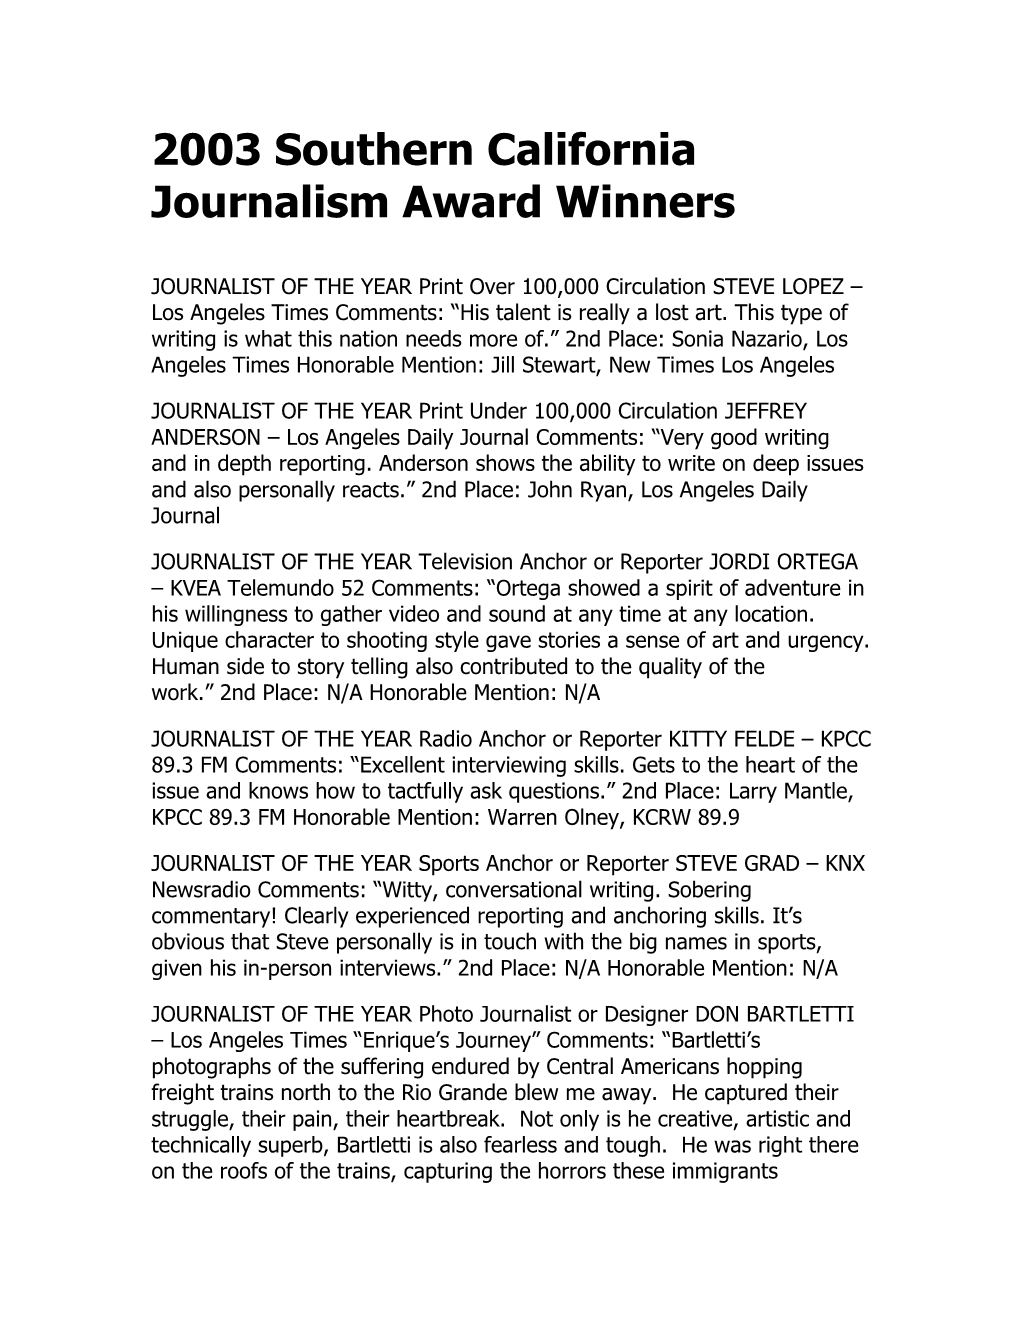 2003 Southern California Journalism Award Winners